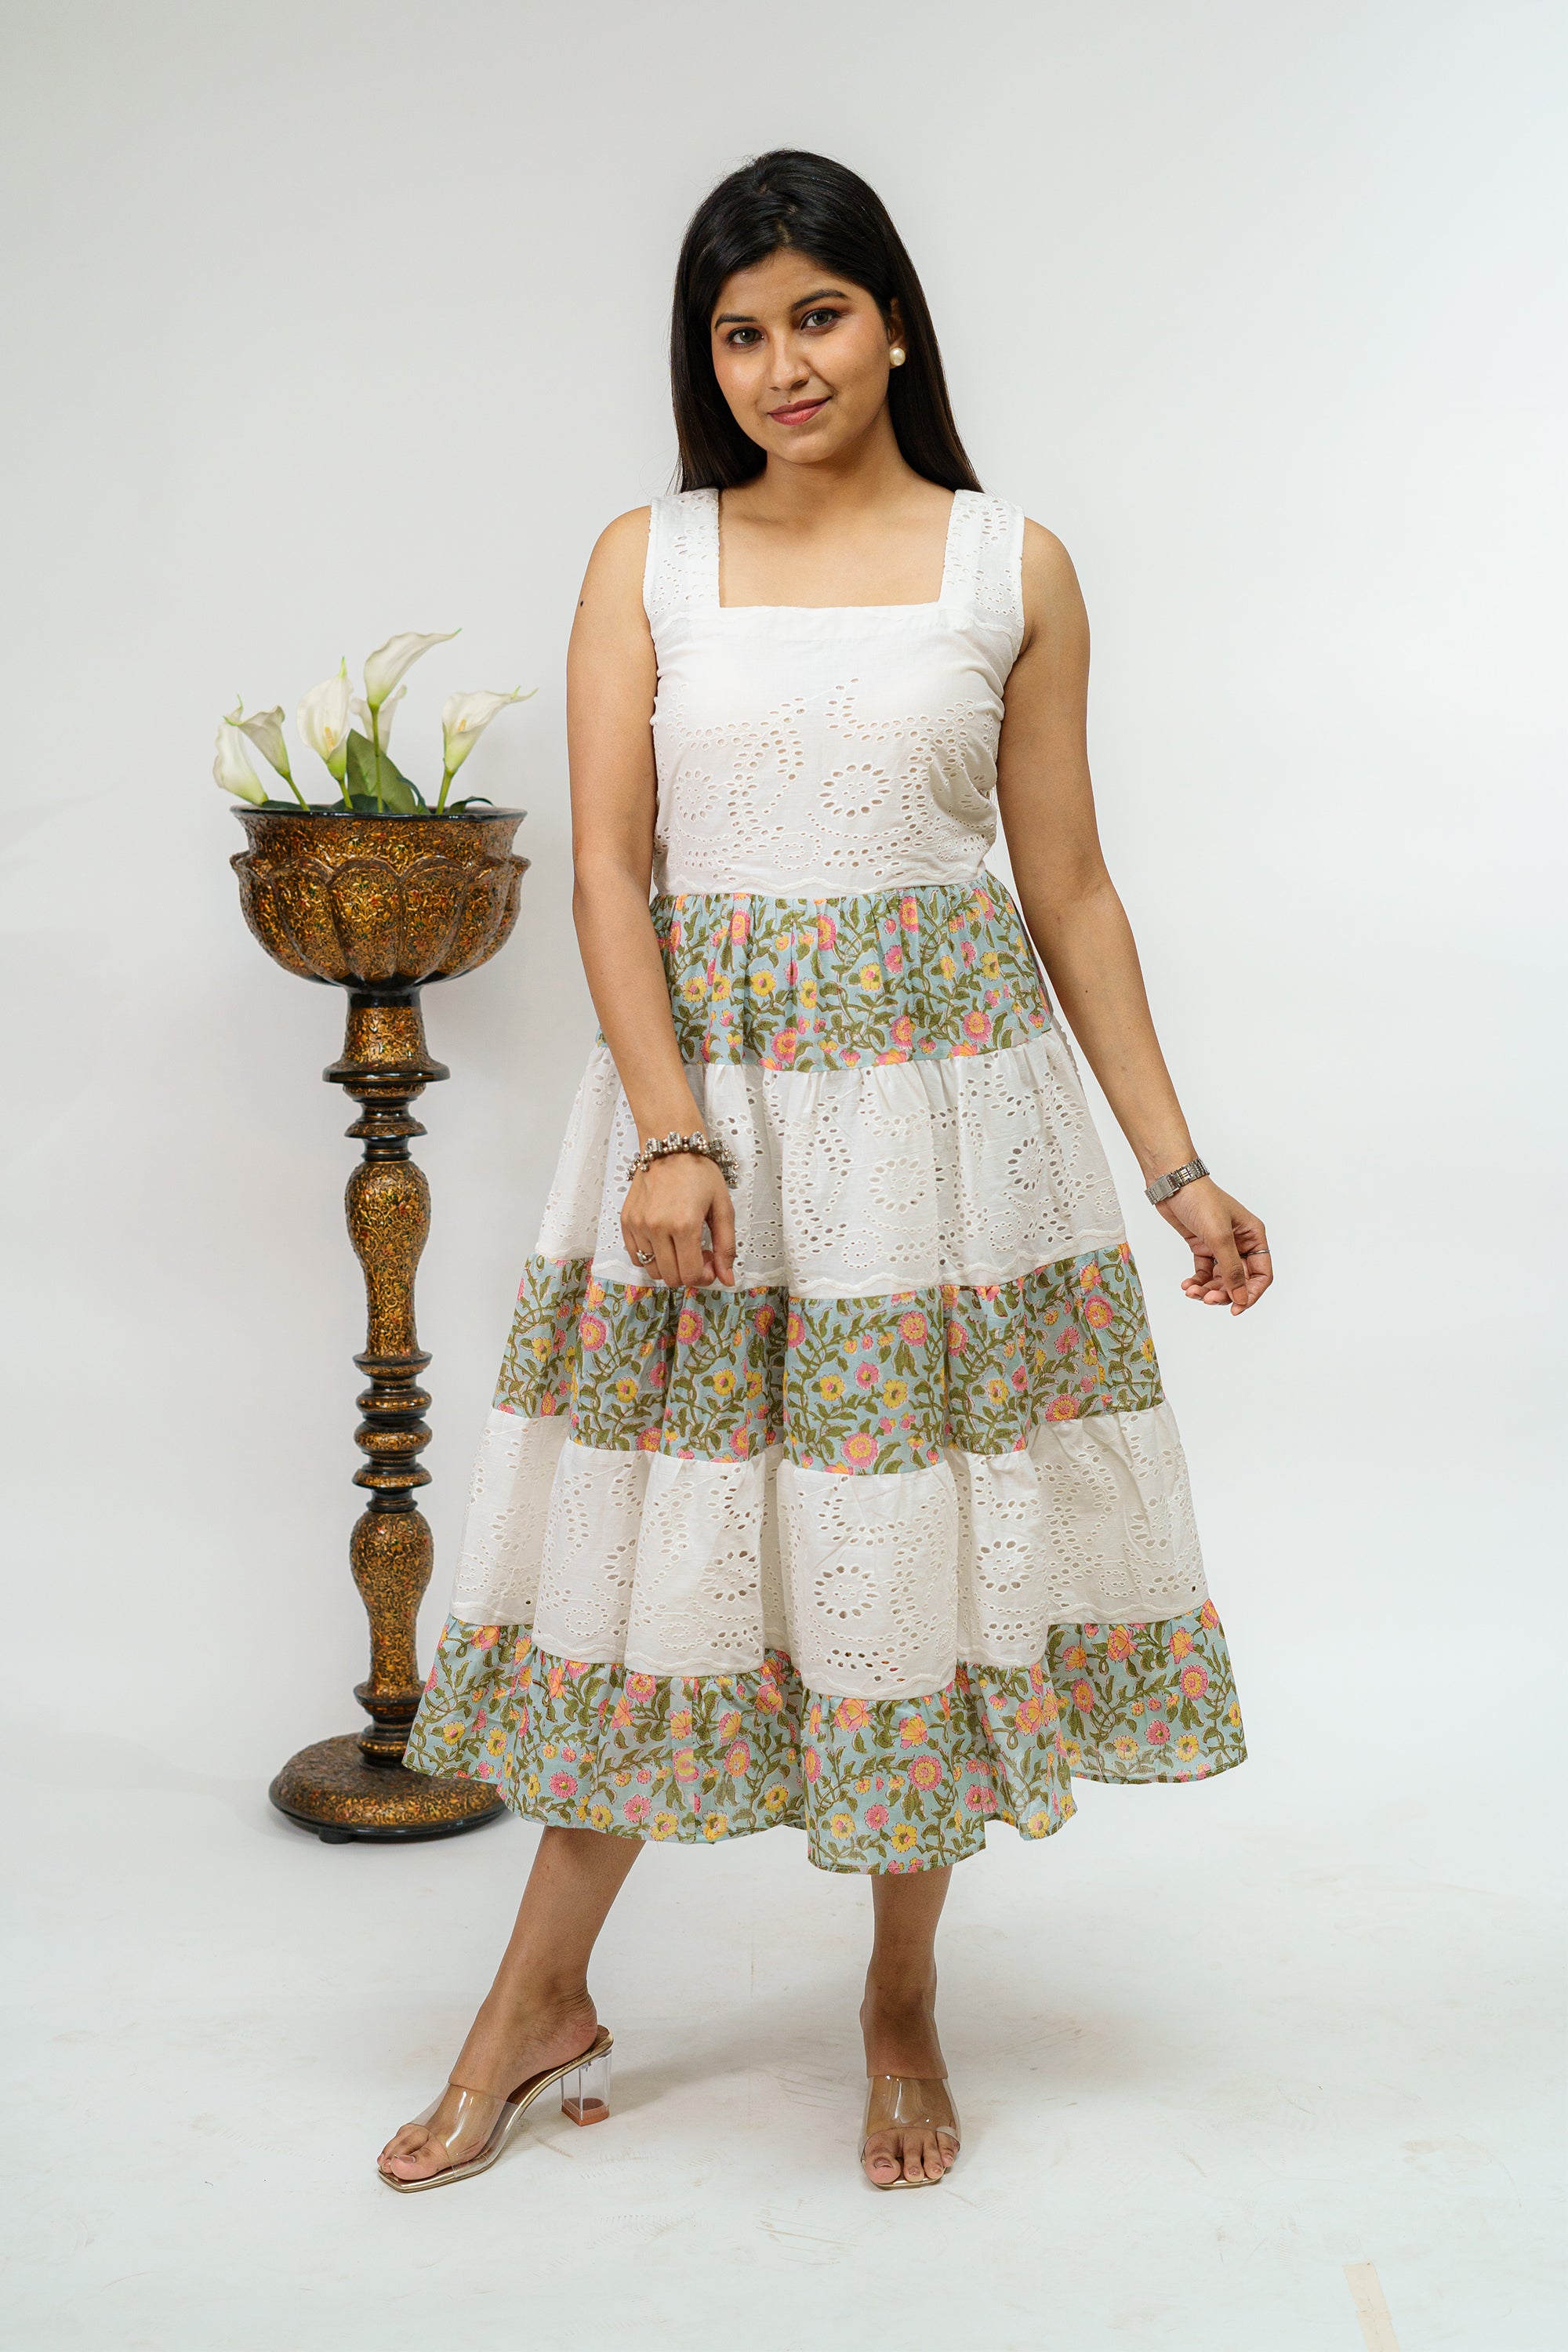 hakoba dress | Kurti designs latest, Dress, Kurti designs